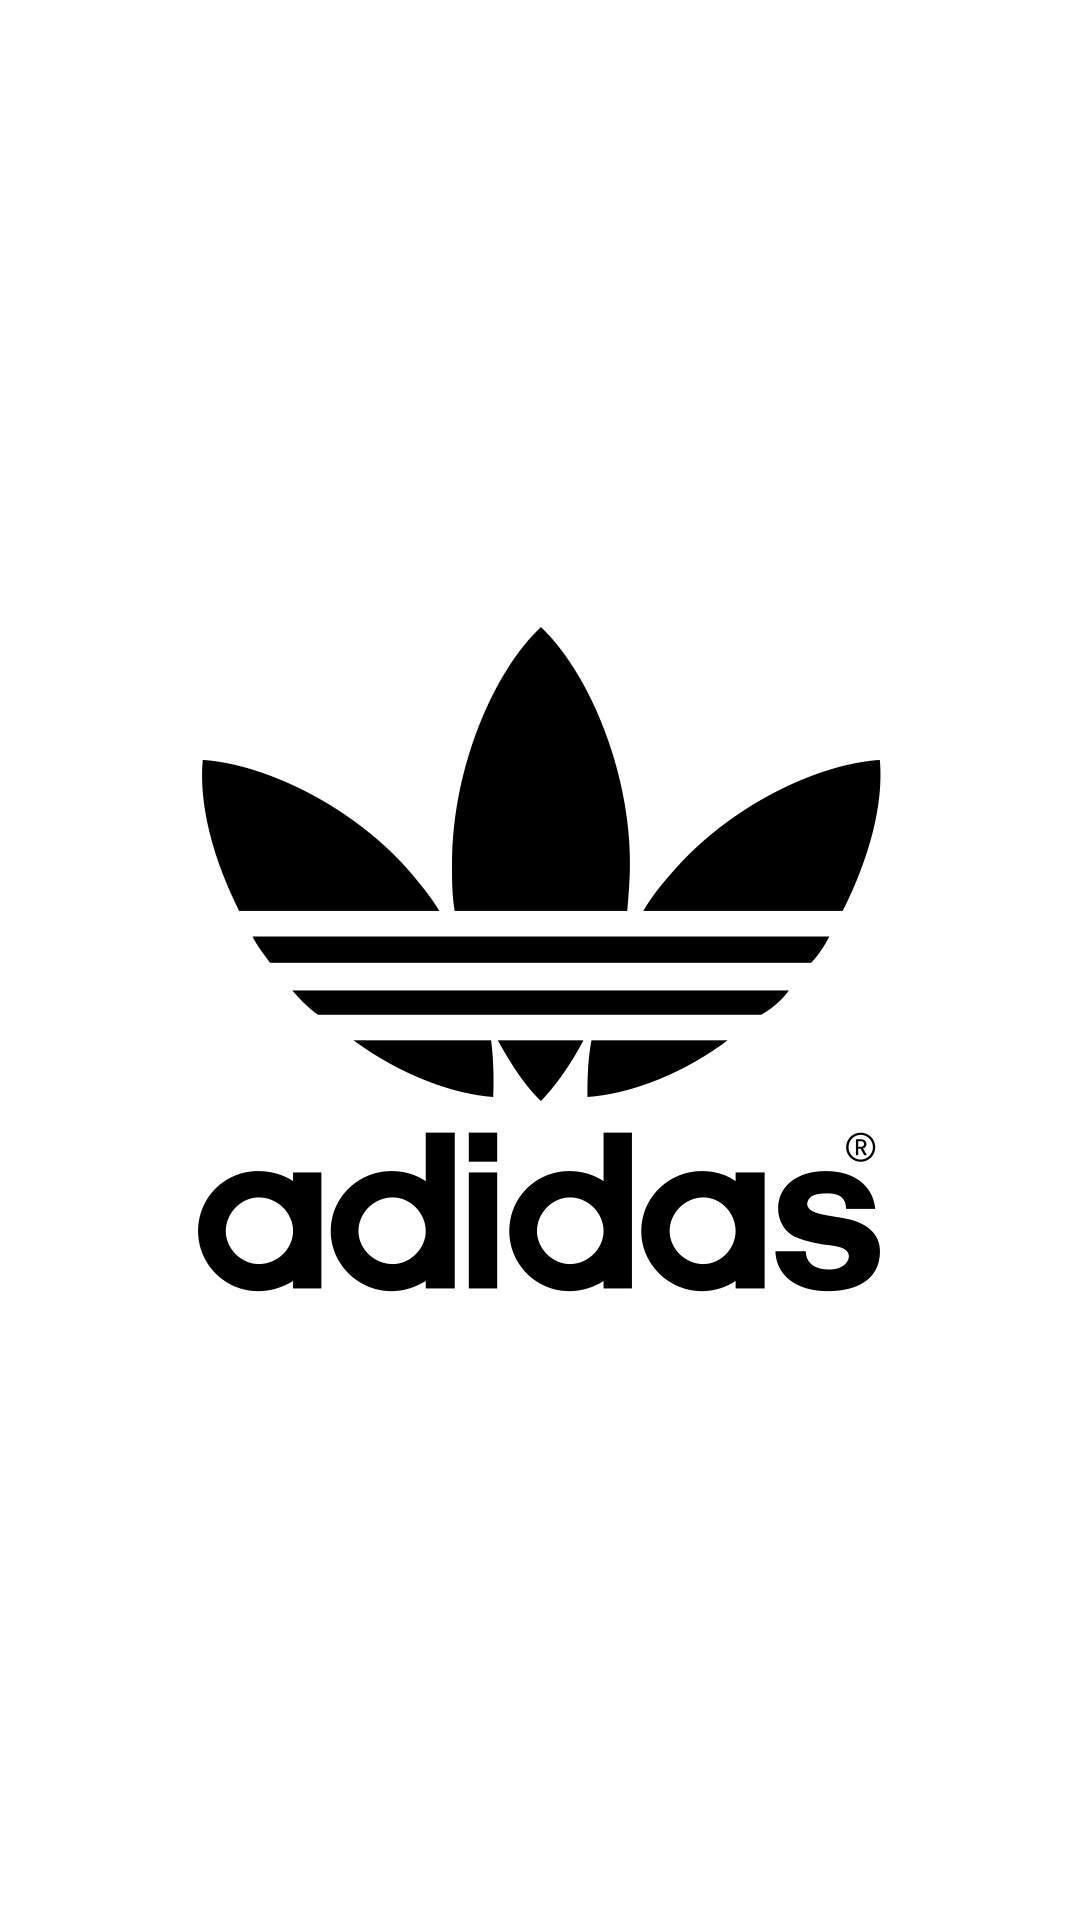 Adidas Logo - $29 on. Fashion trends. Logos, Adidas iphone wallpaper, iPhone